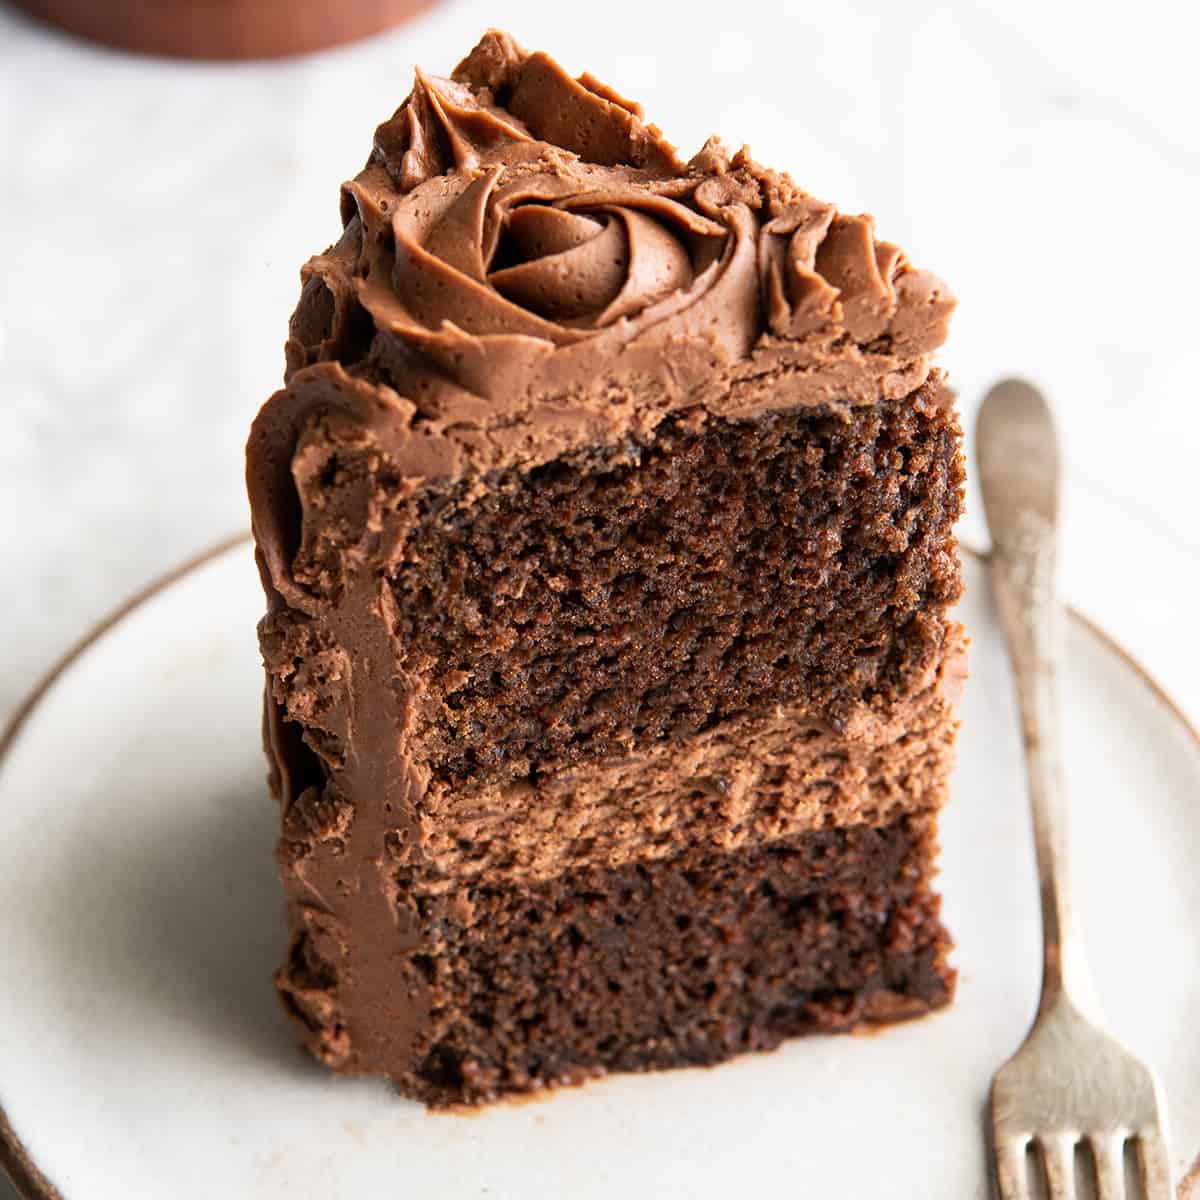 Best Chocolate Cake Recipe (Homemade From Scratch)